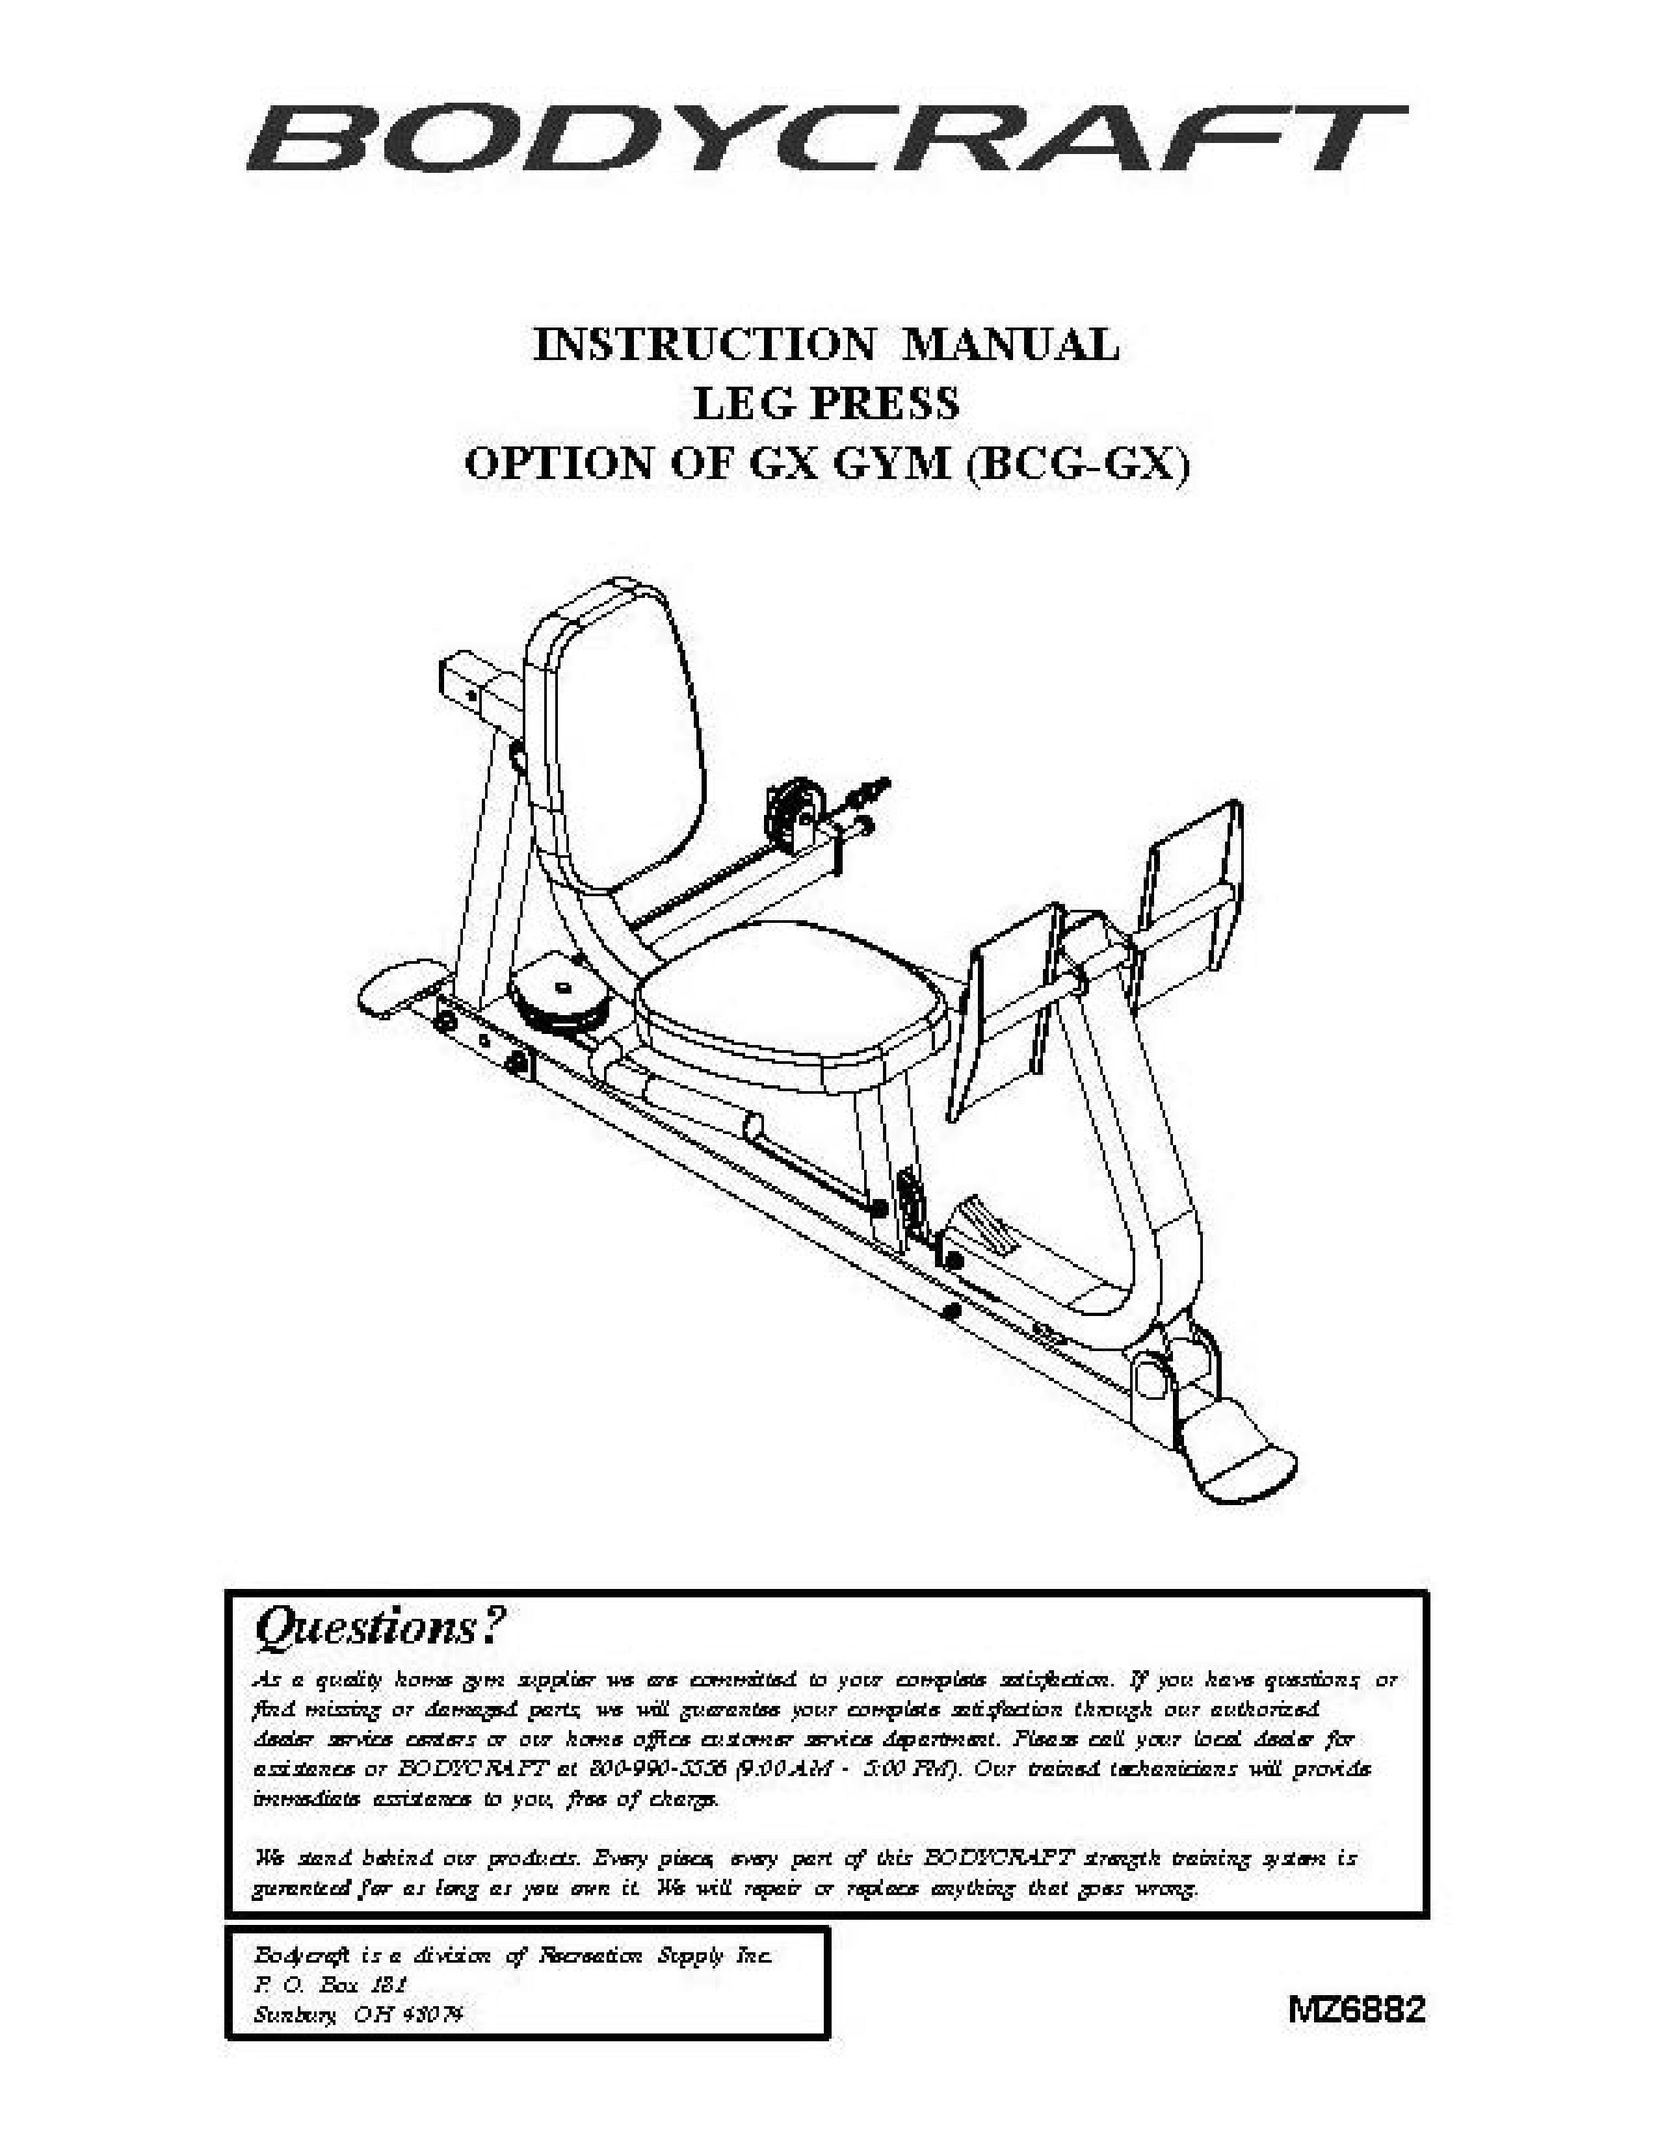 BodyCraft MZ6882 Home Gym User Manual